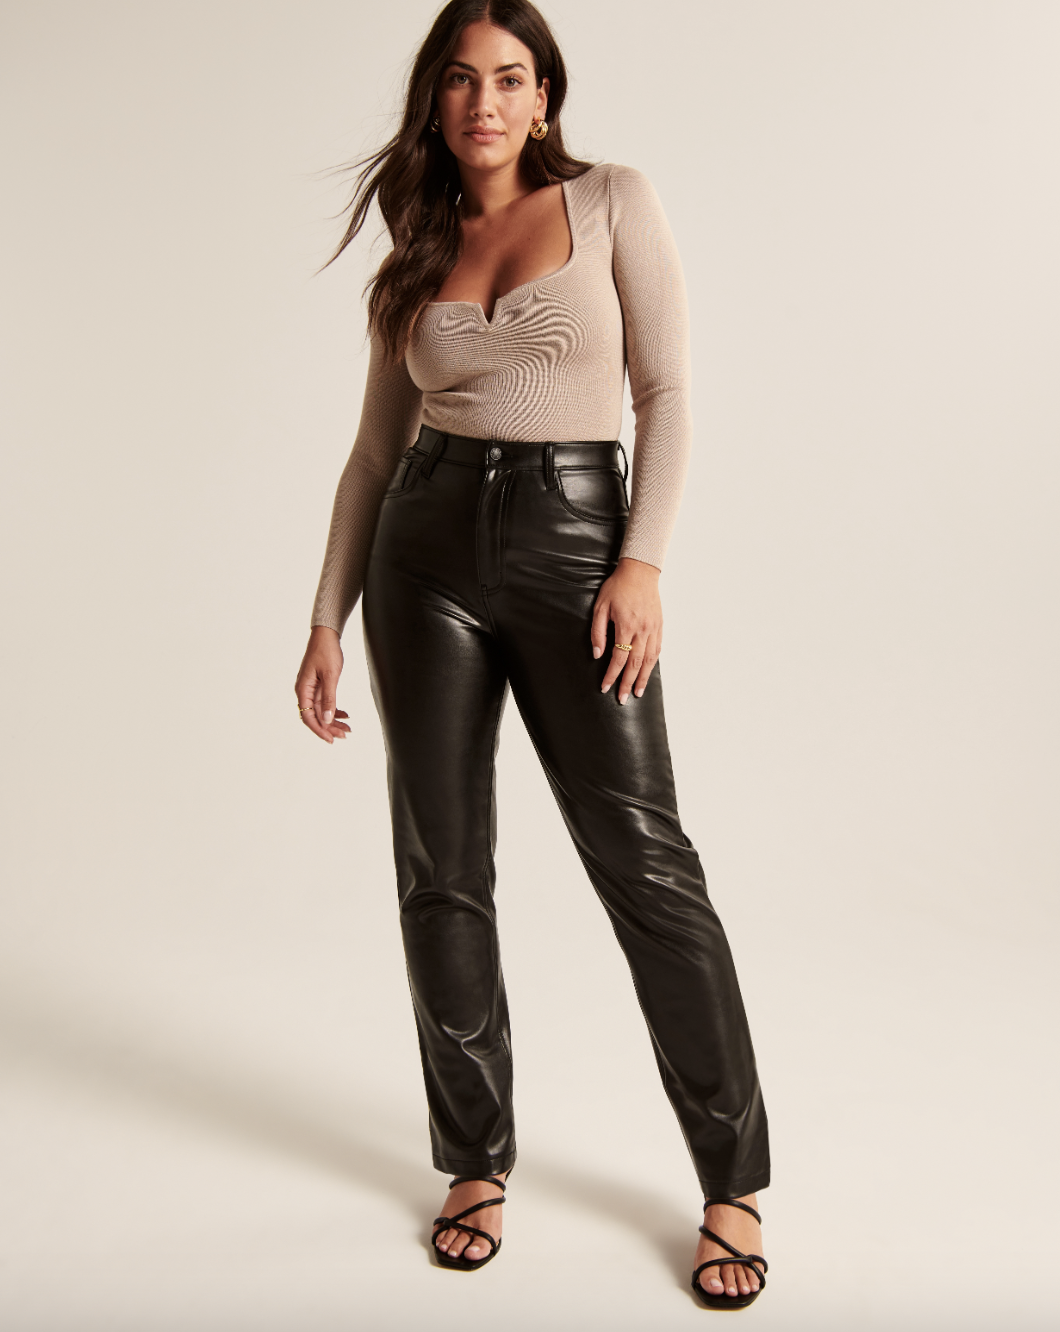 model wearing the vegan leather pants